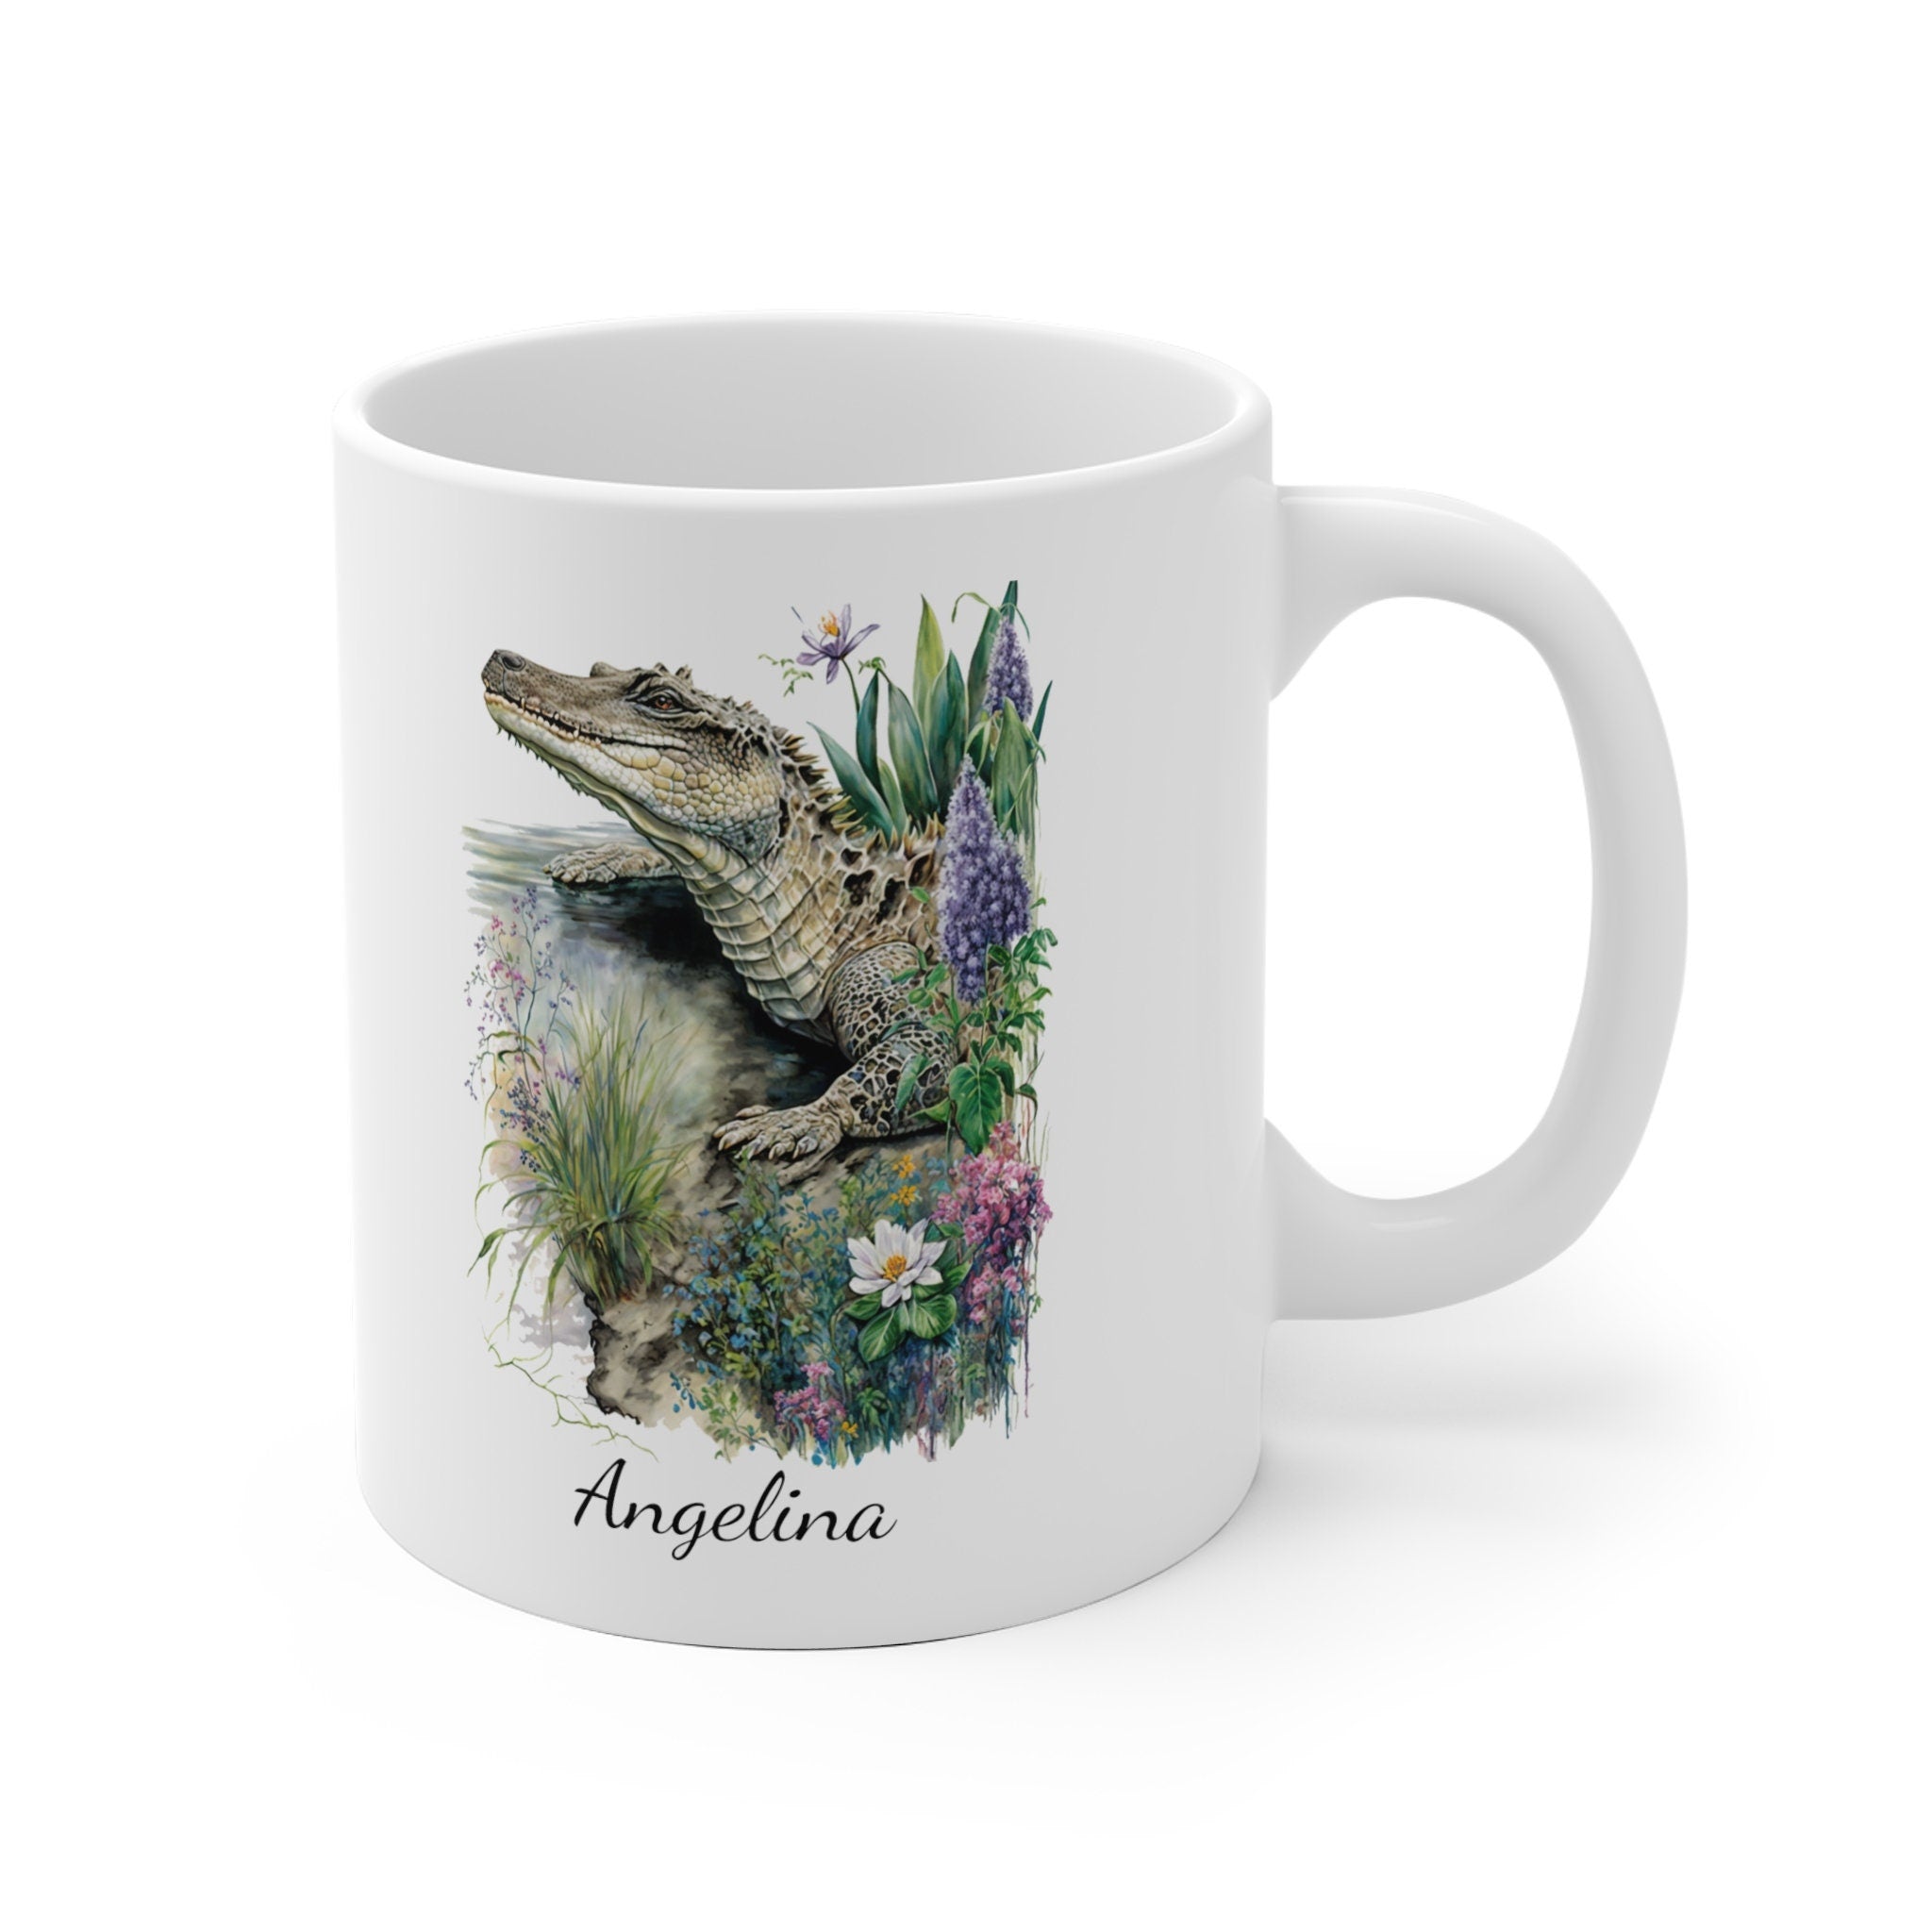 Personalized Crocodile Coffee Mug